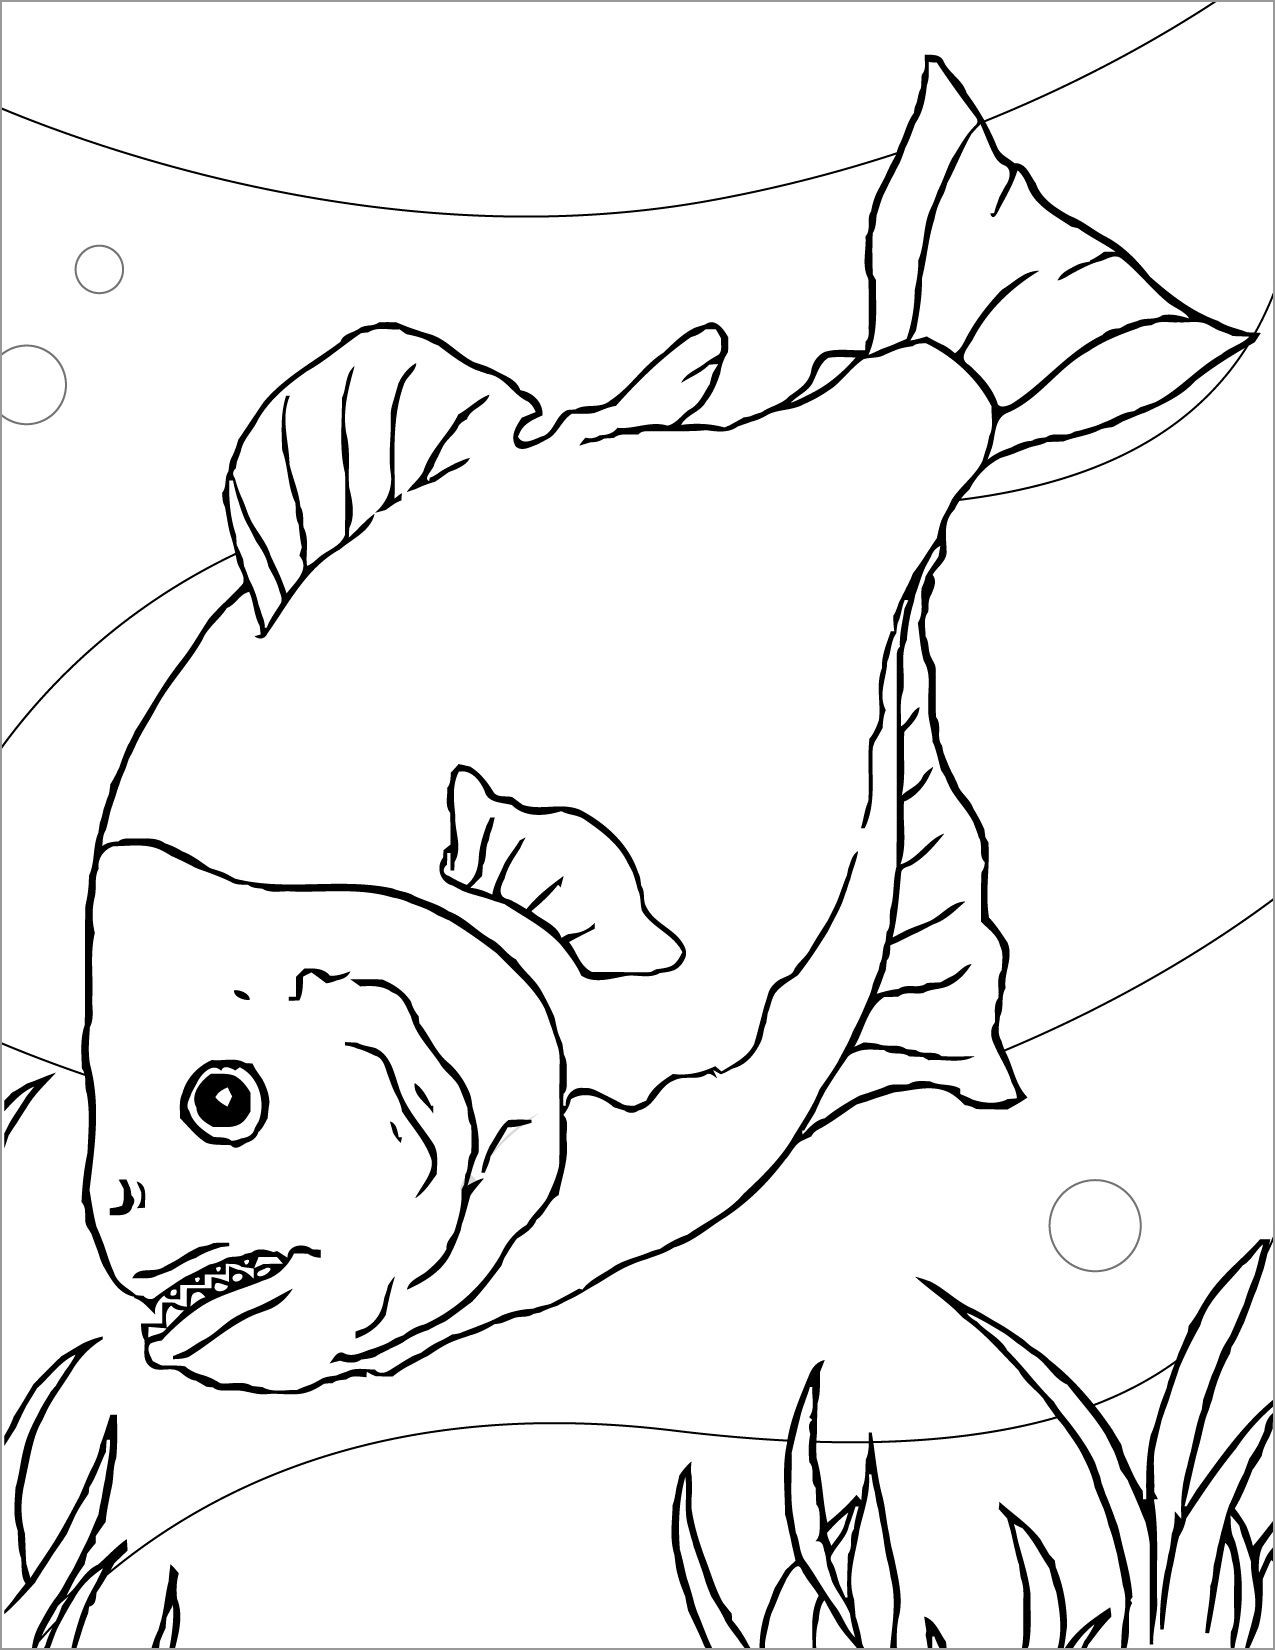 Easy Piranha Coloring Page